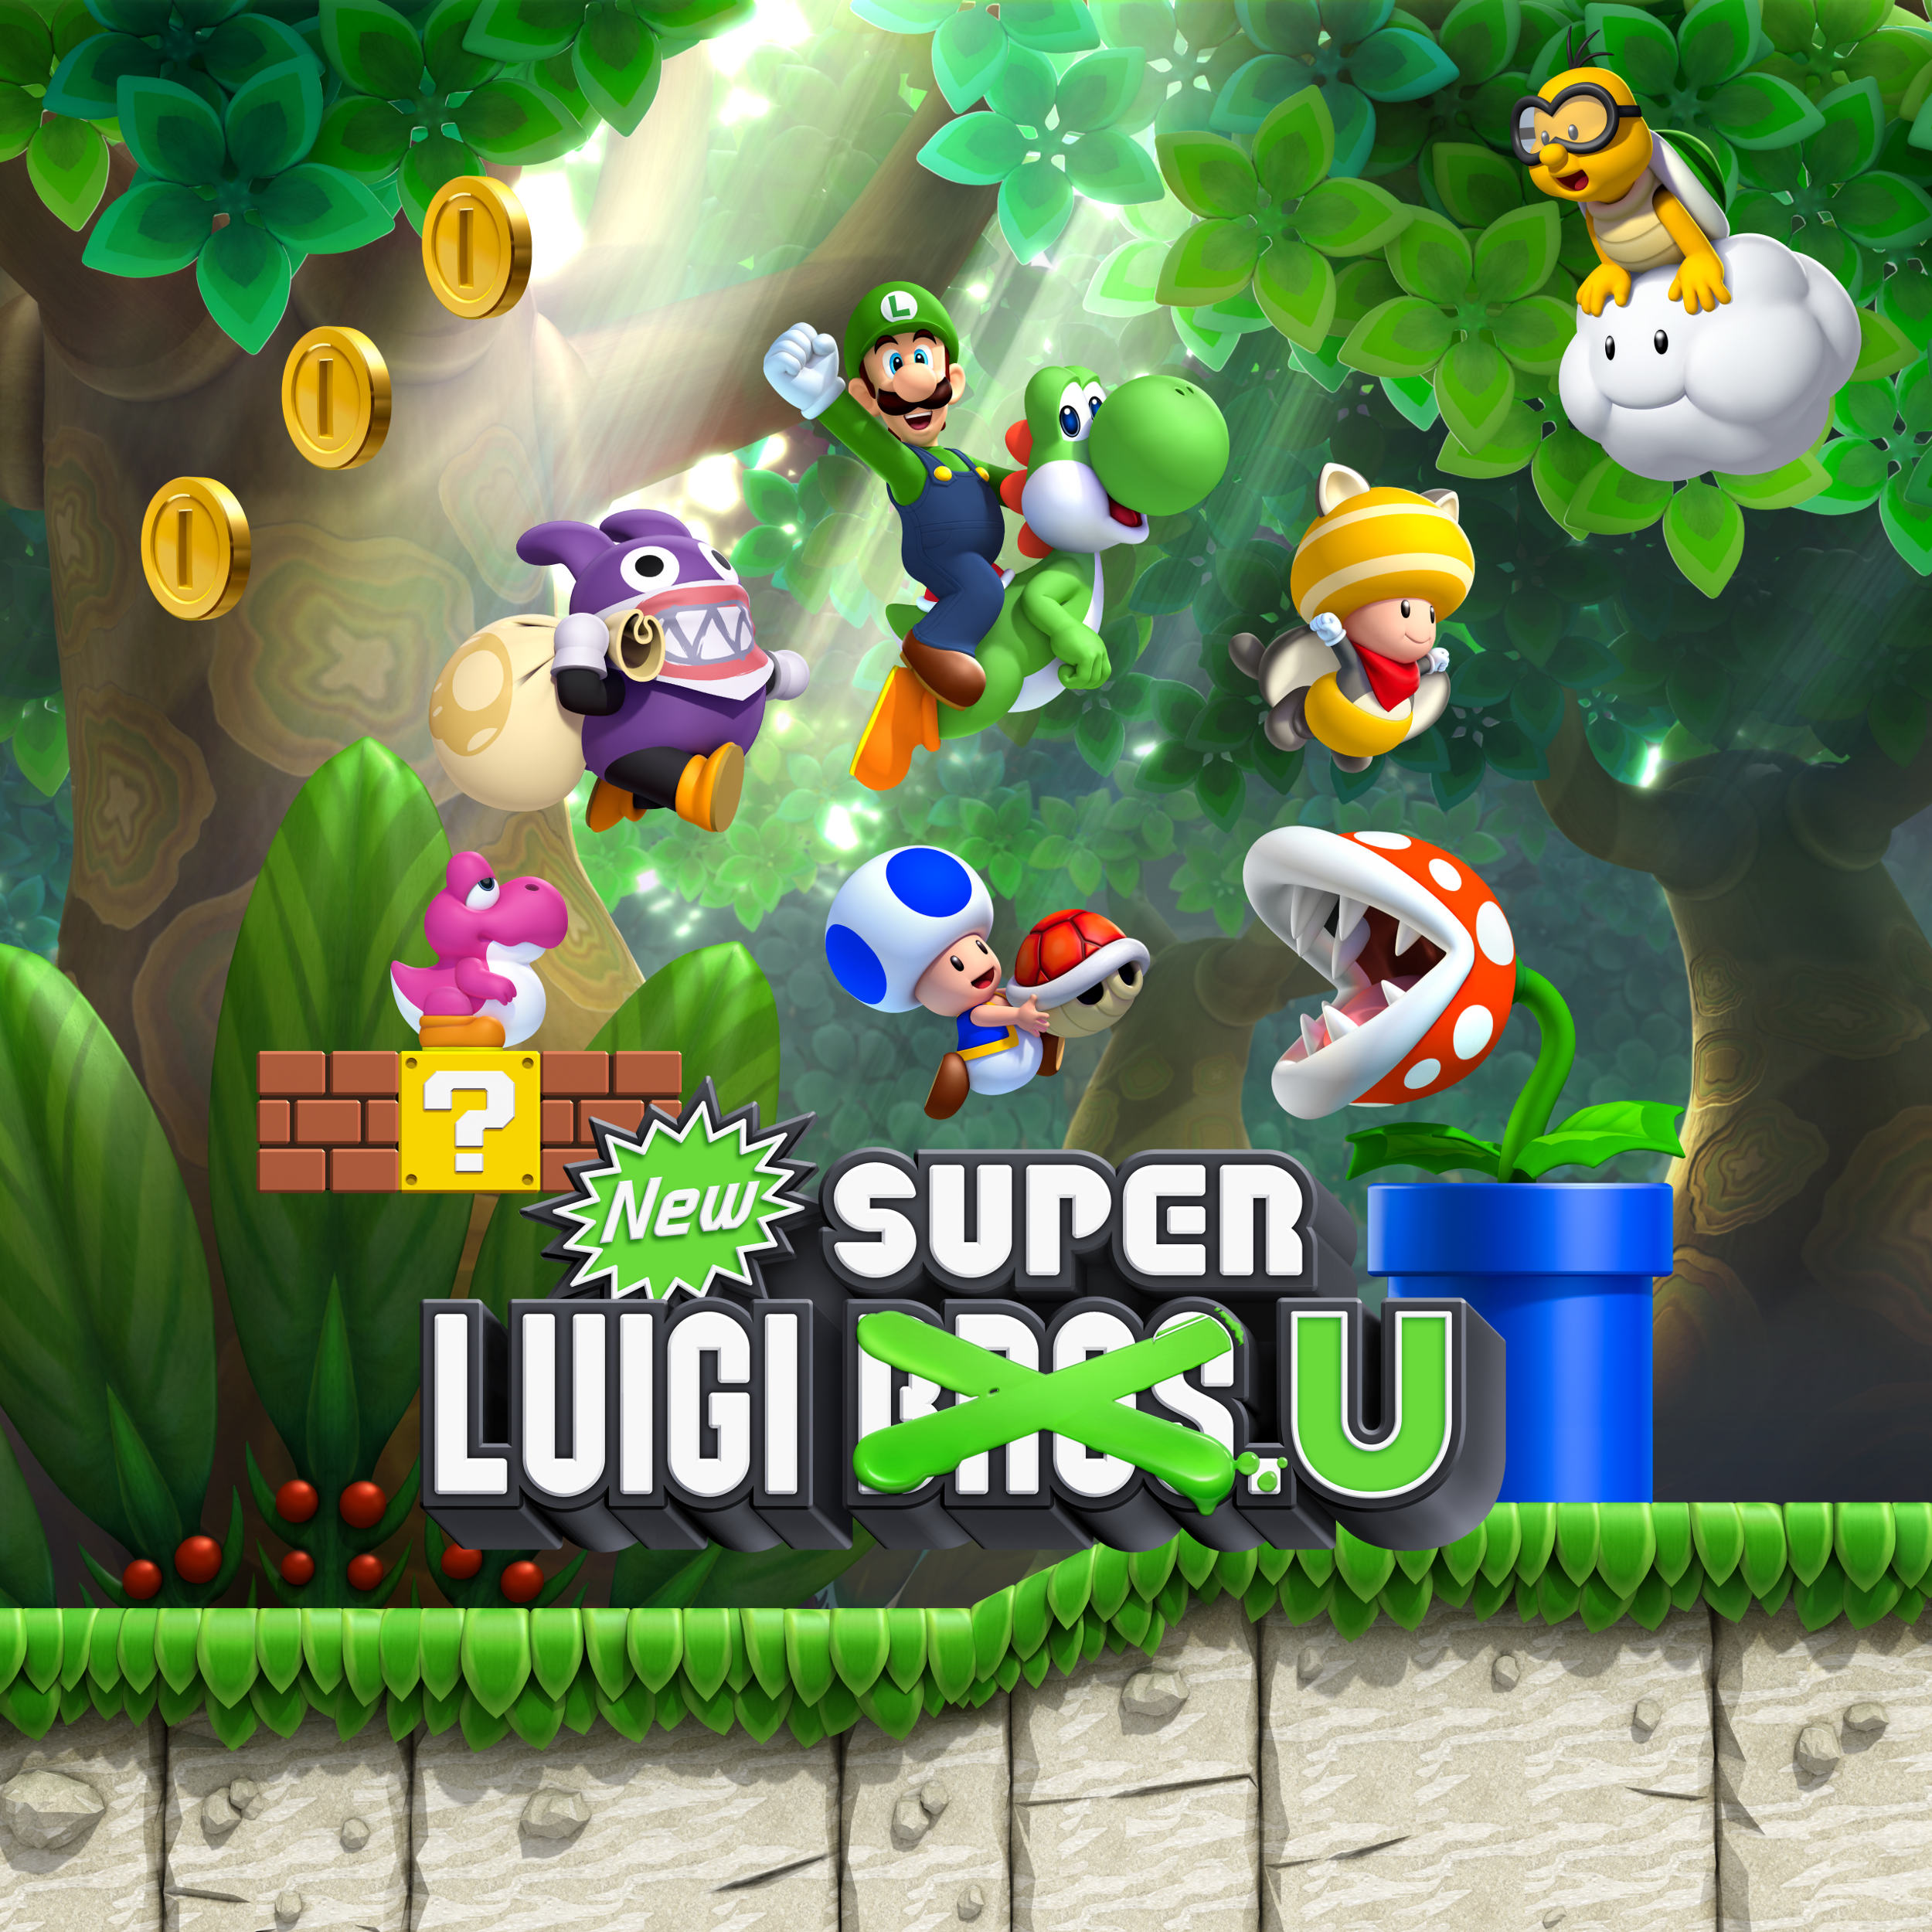 Amazing New Super Luigi U Pictures & Backgrounds